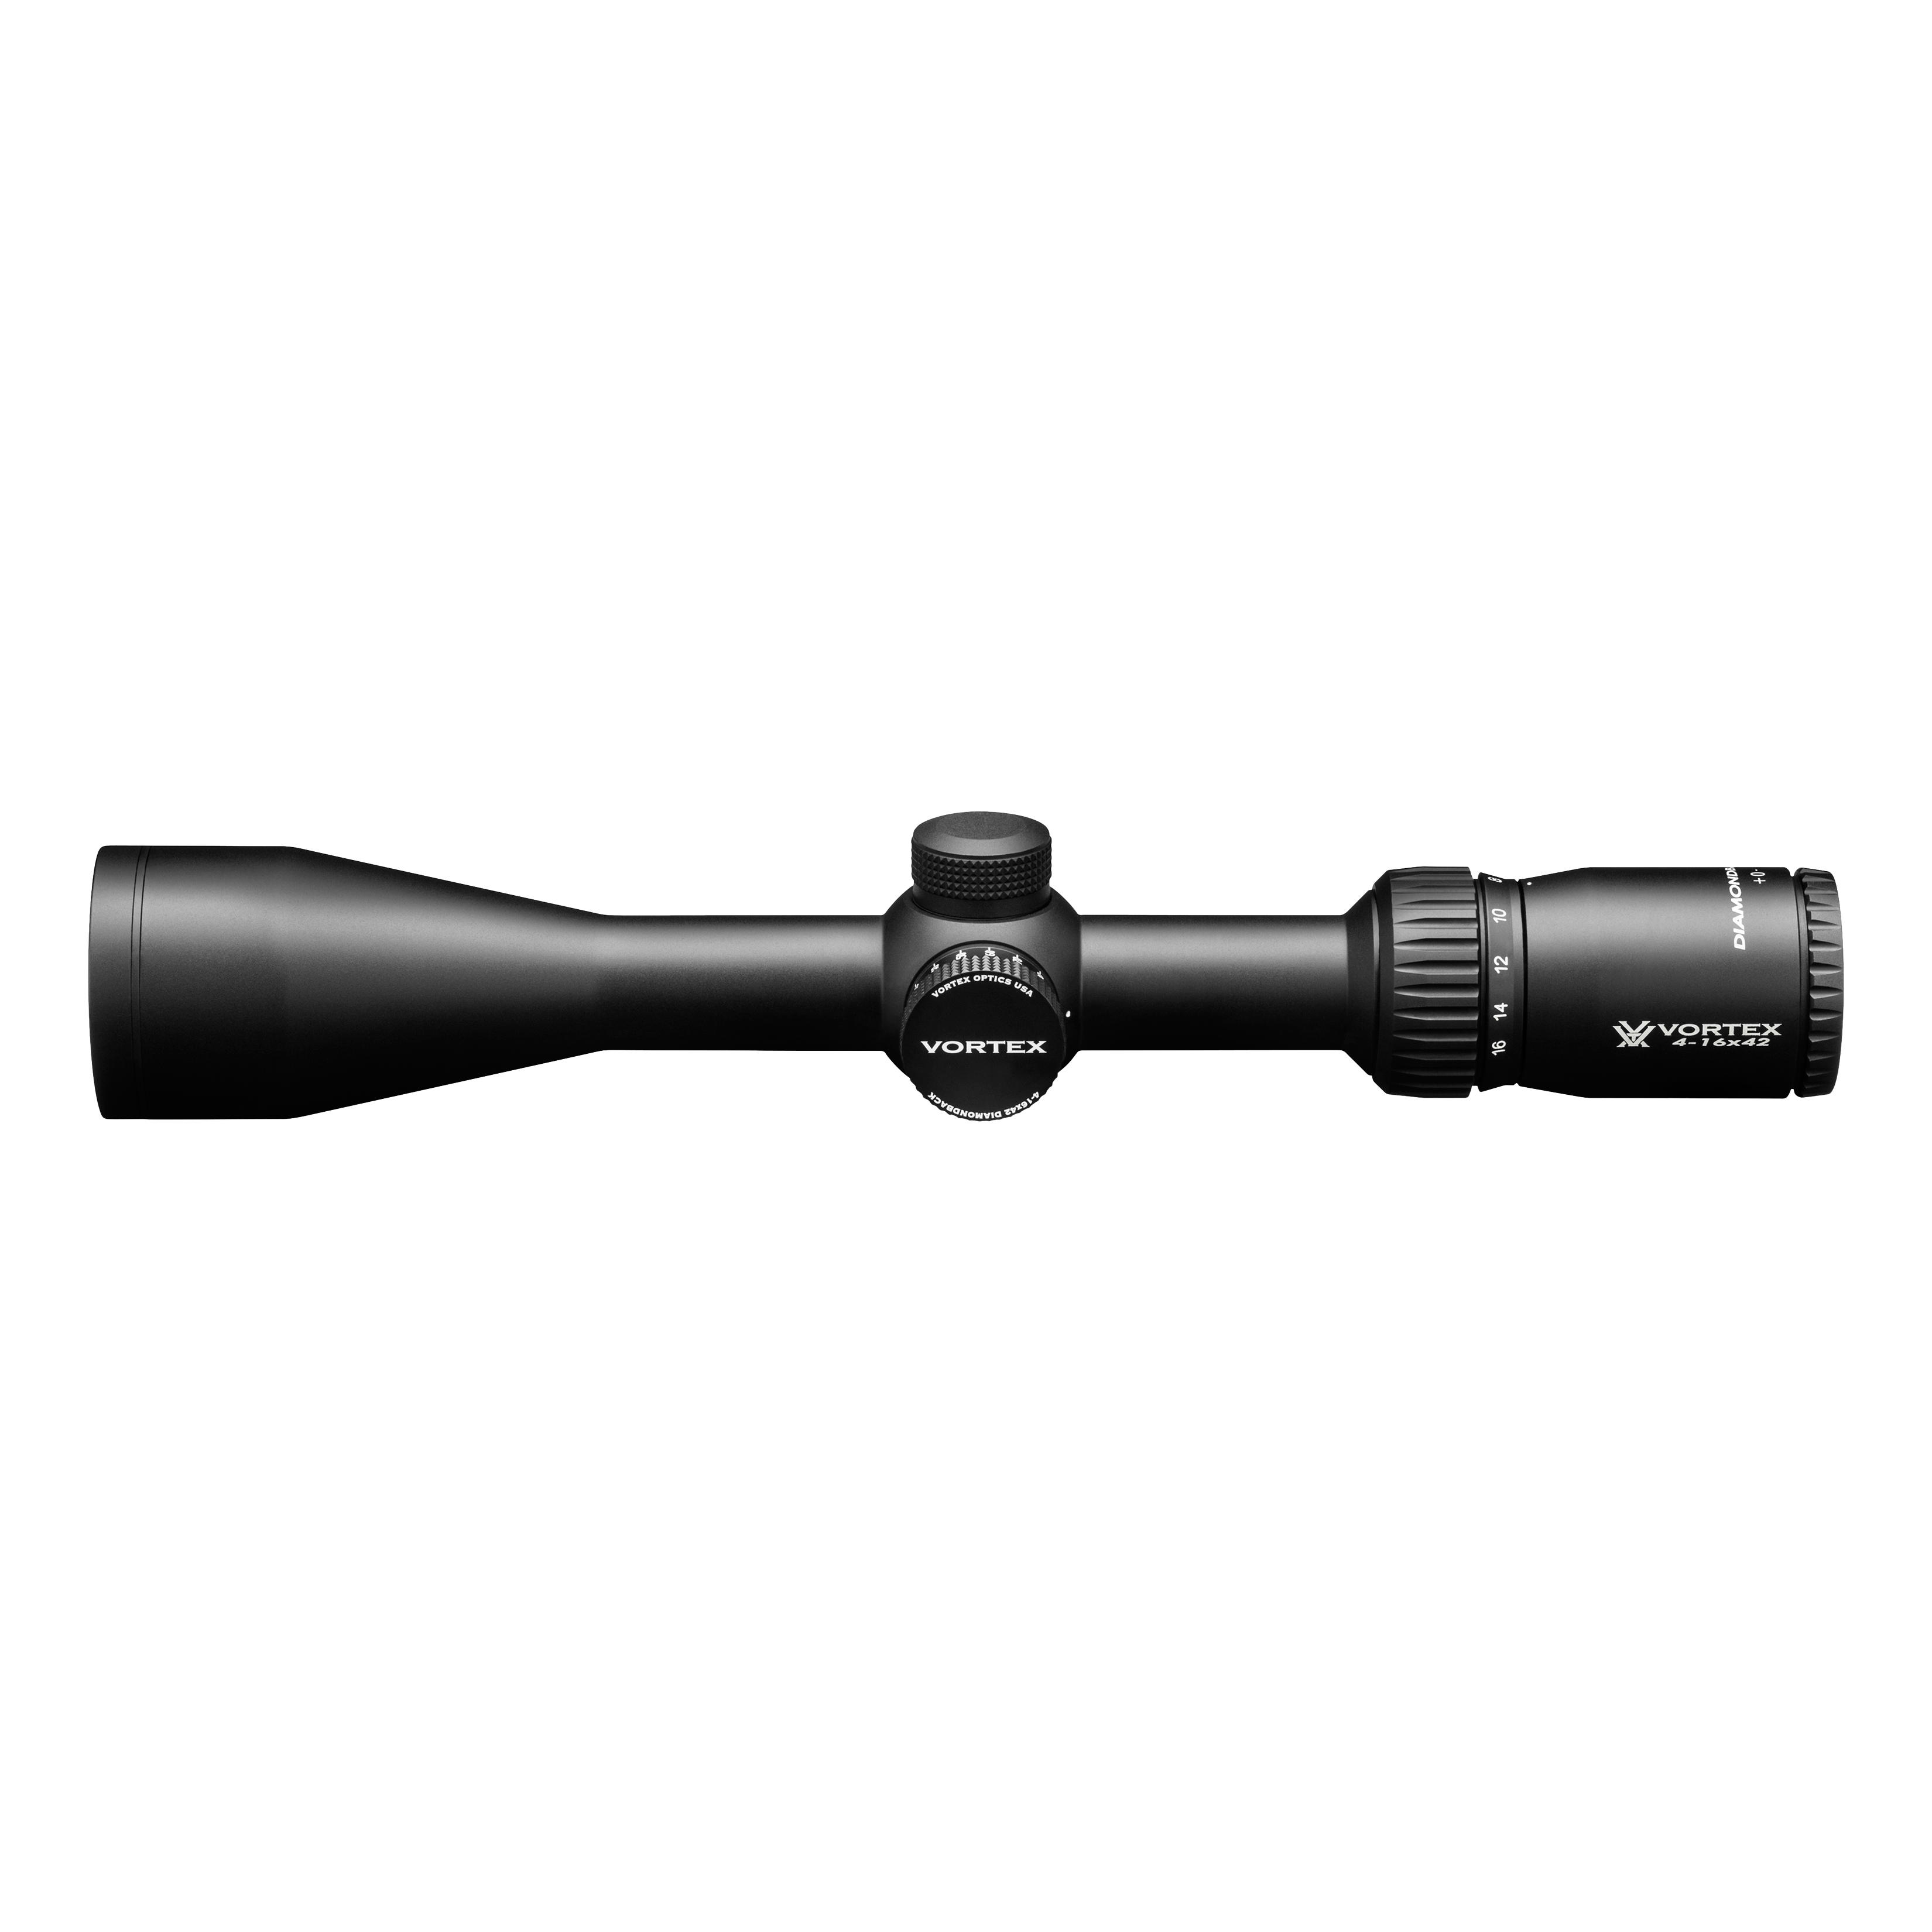 Vortex® Diamondback HP 1" Riflescope - Side View